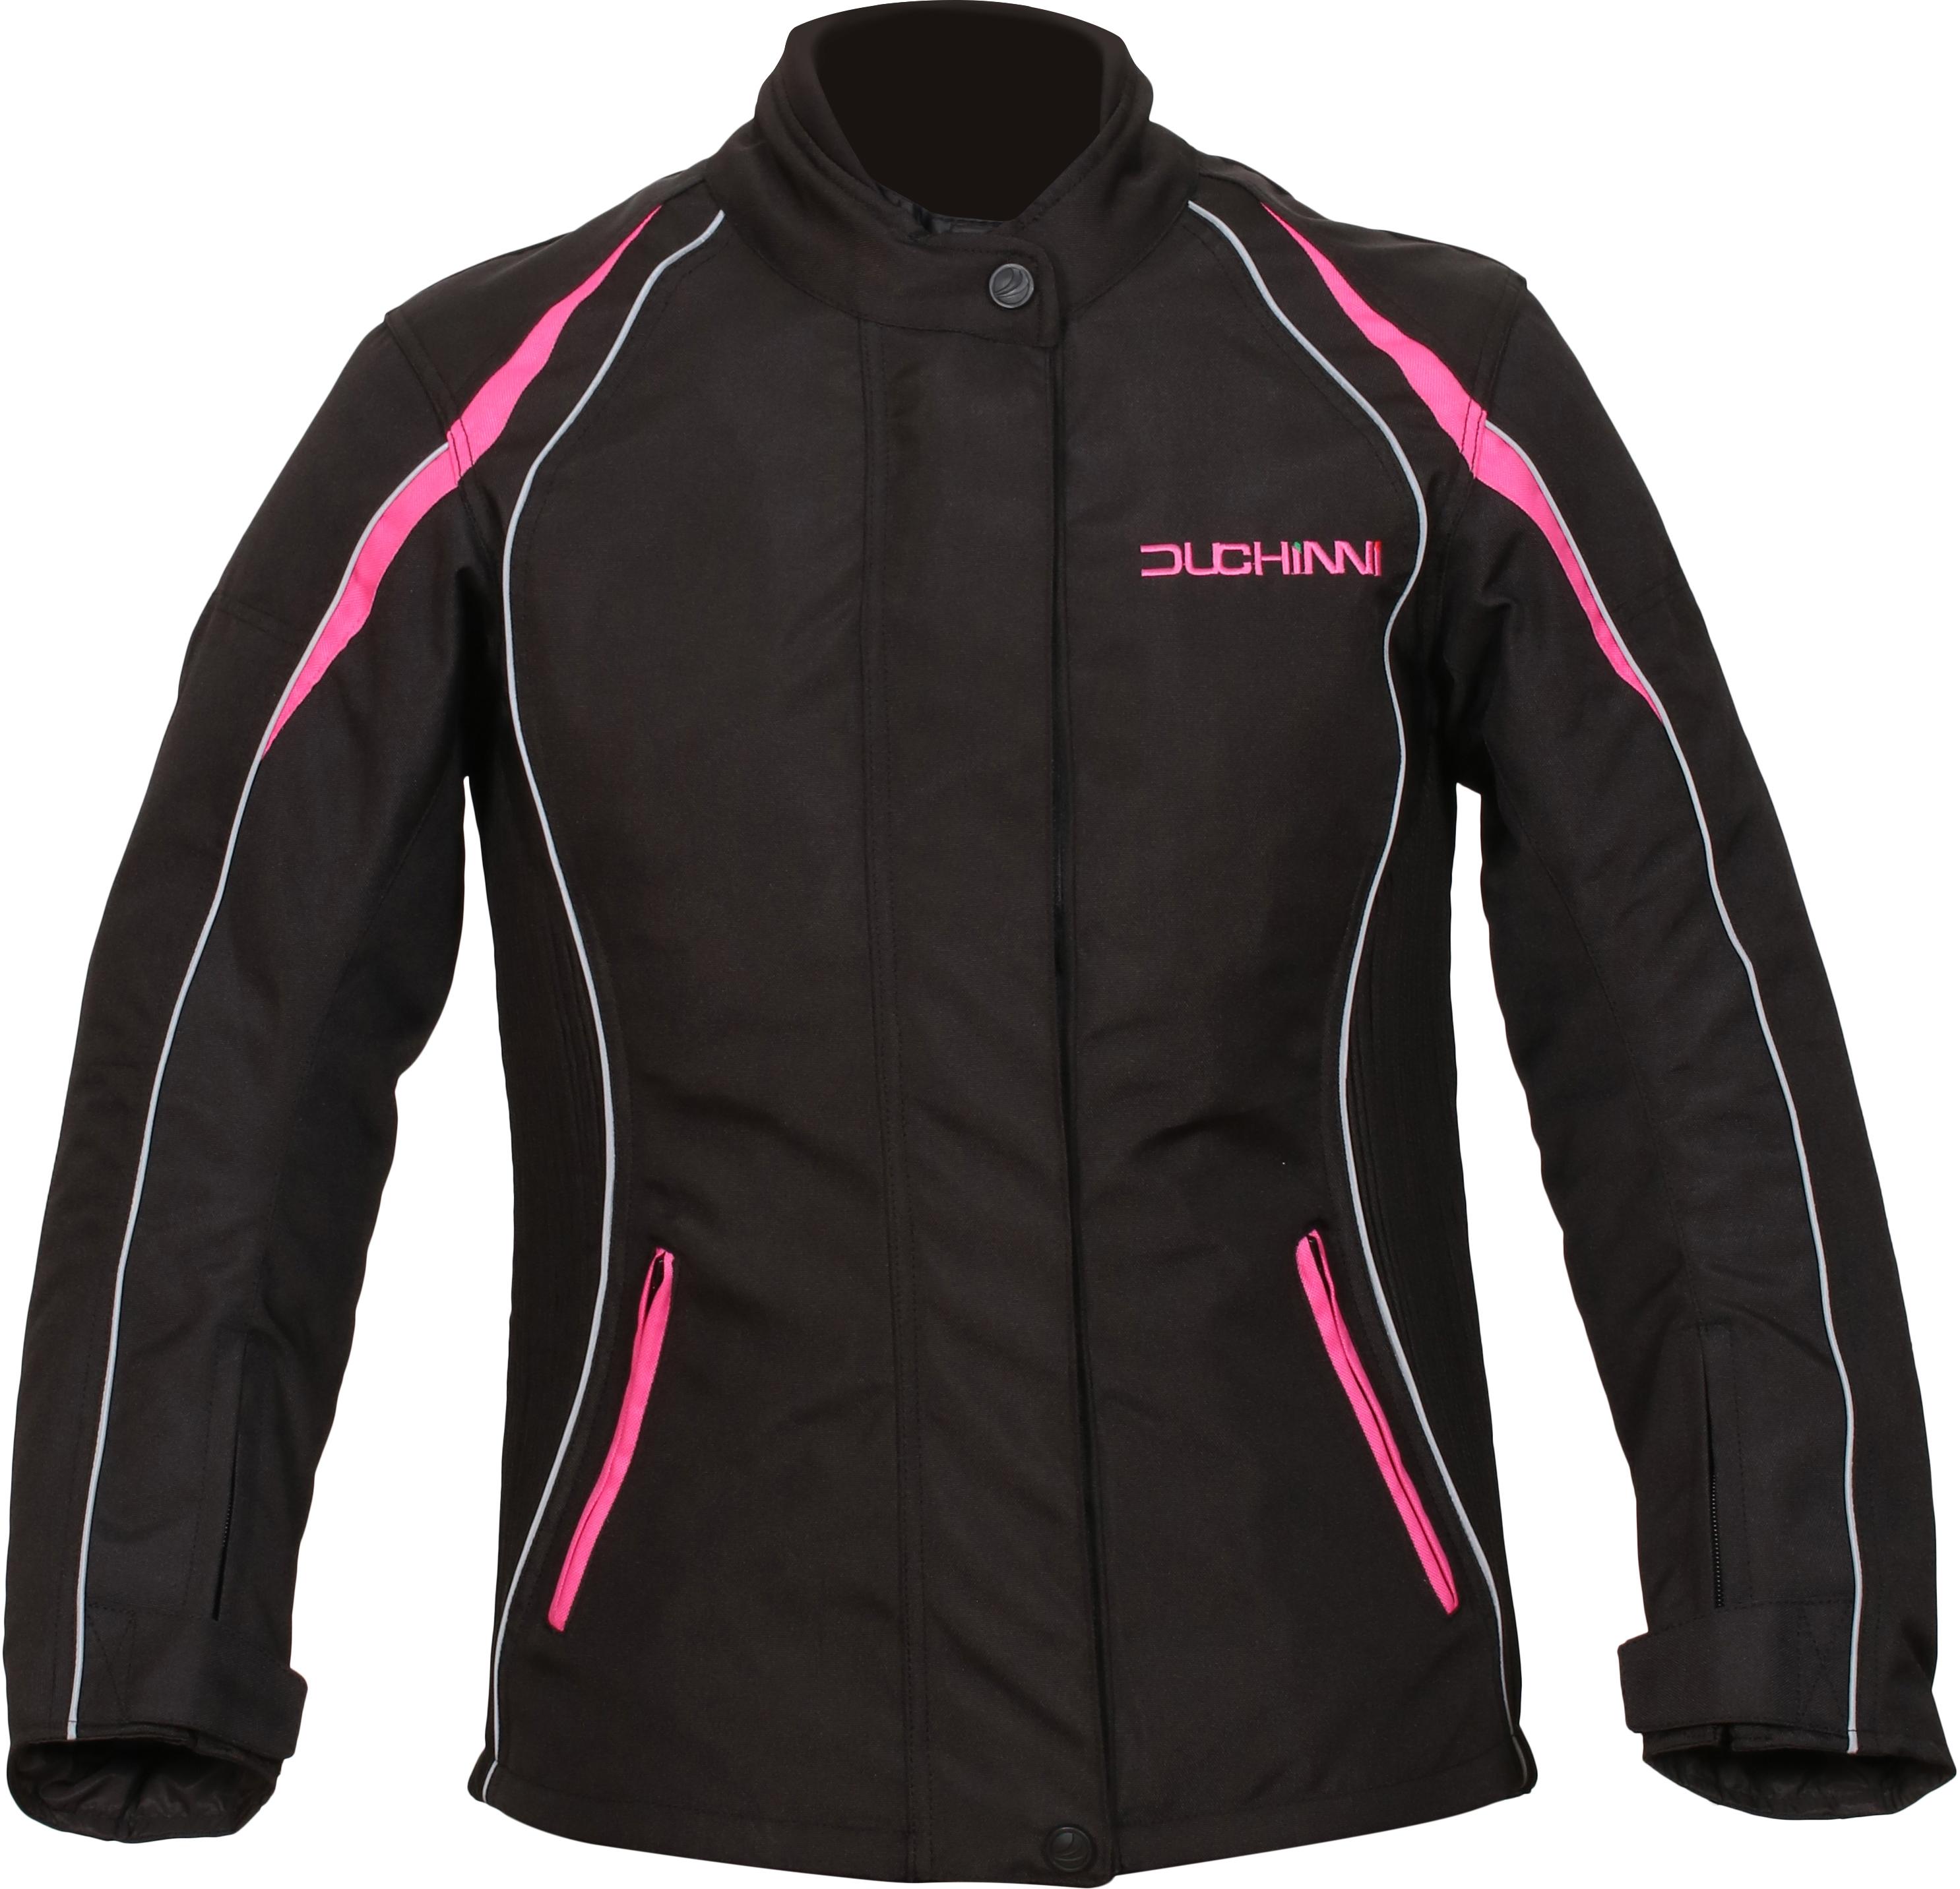 Duchinni Vienna Ladies Motorcycle Jacket - Black And Pink, 10